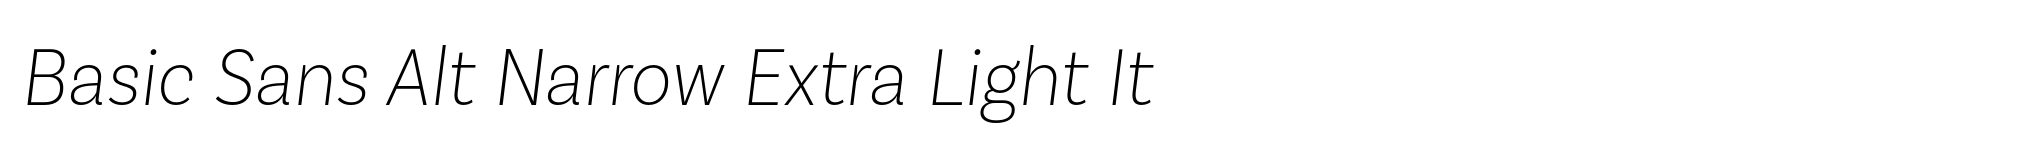 Basic Sans Alt Narrow Extra Light It image